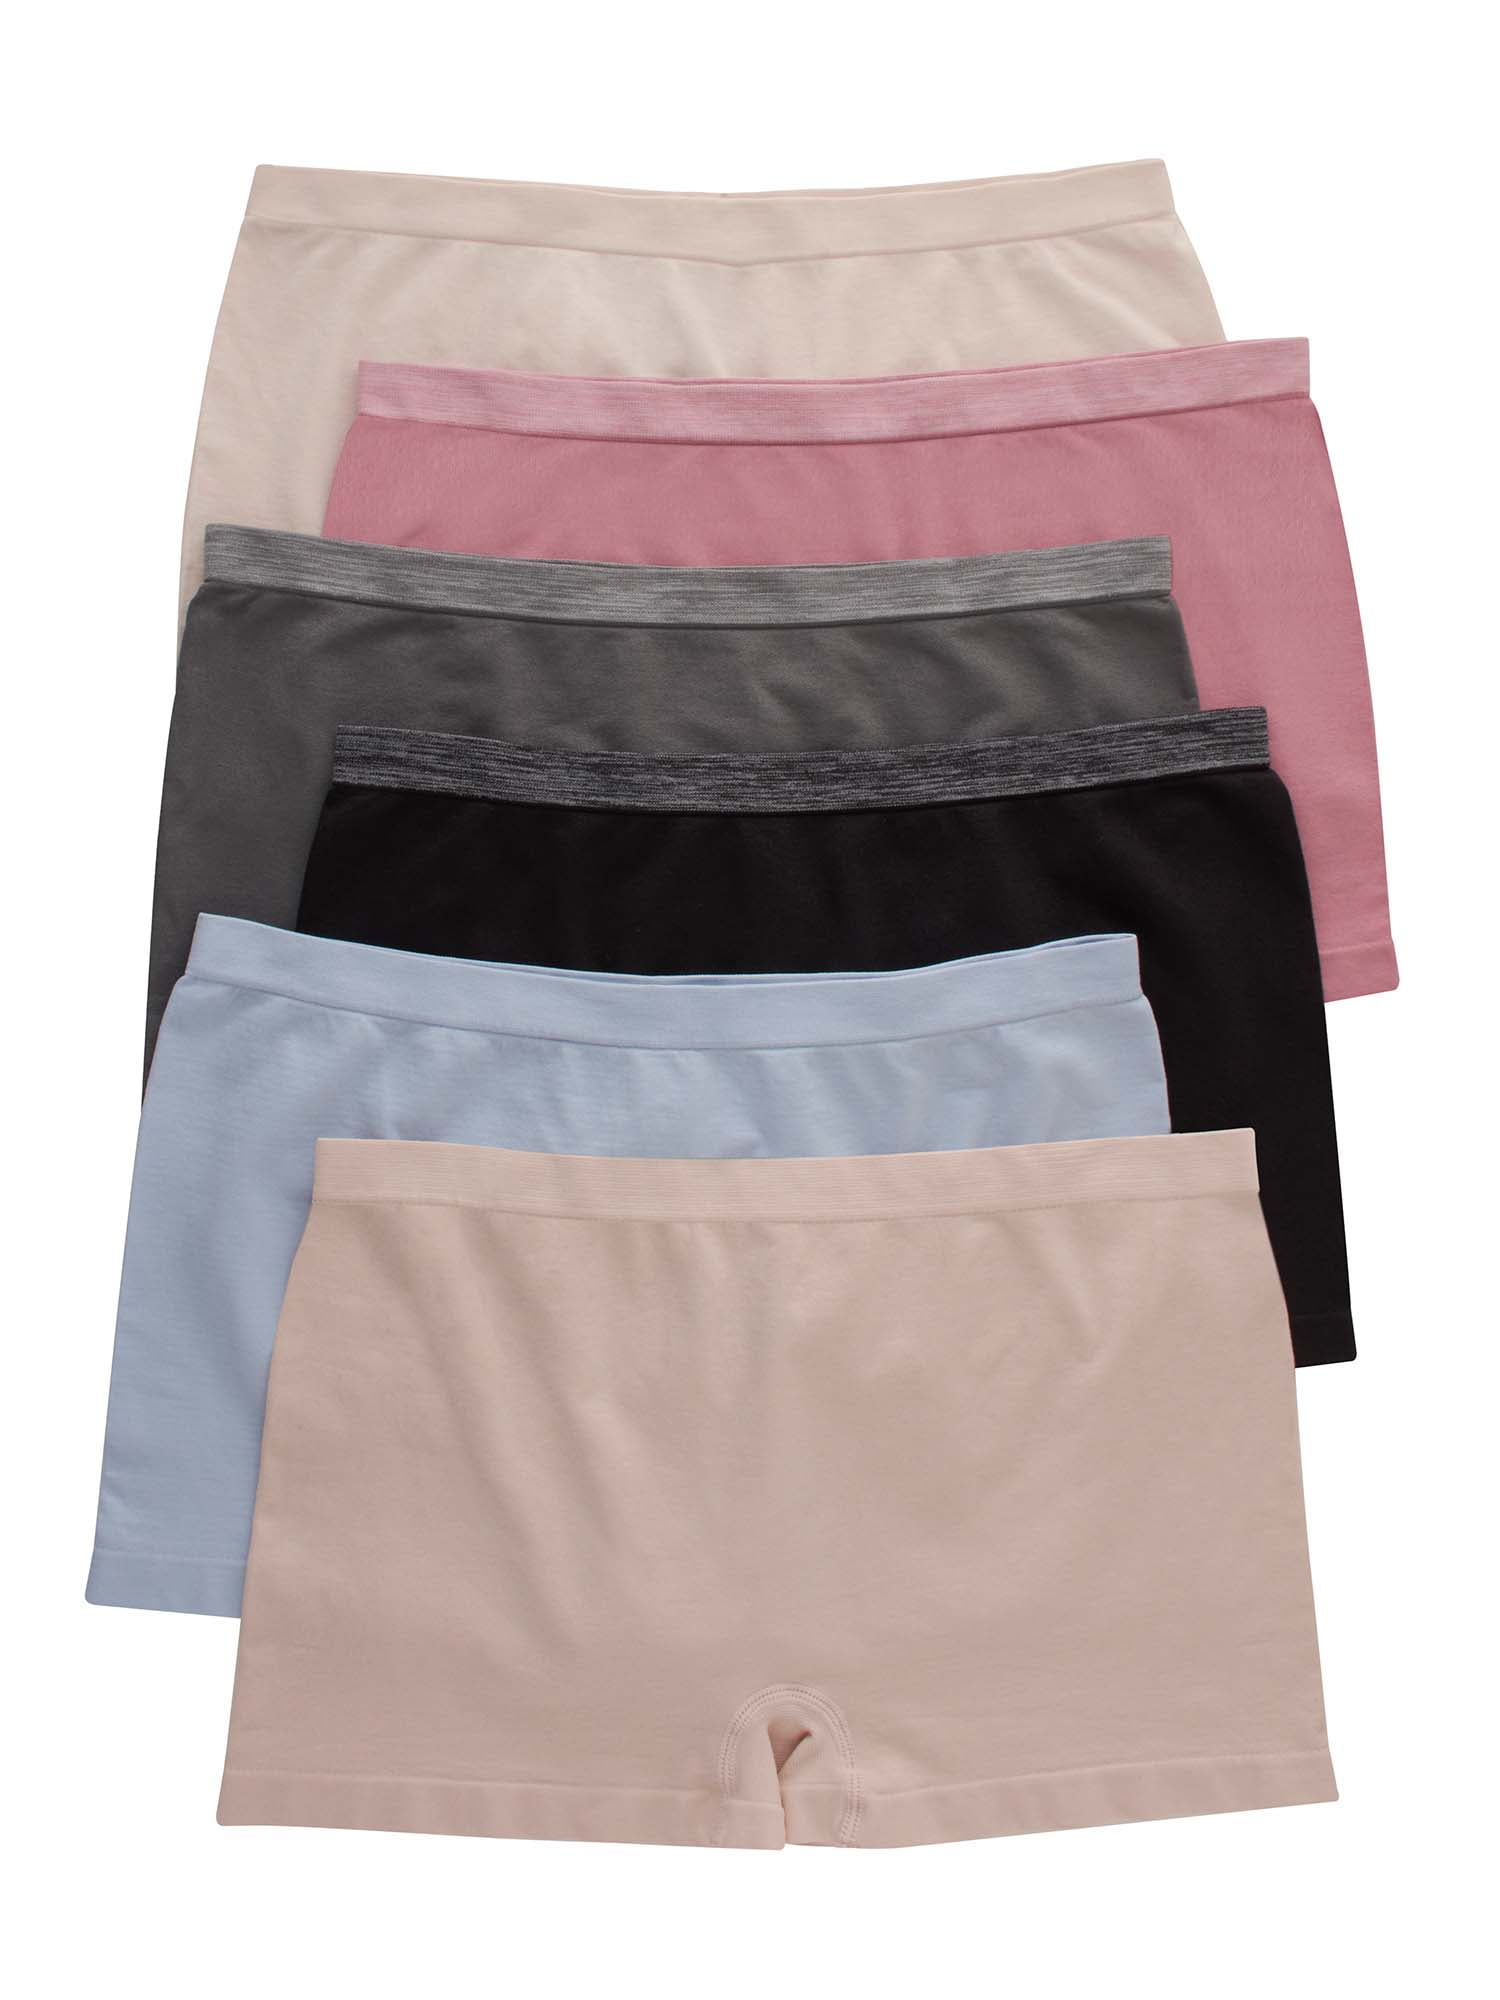 Hanes Women's Panties Pack, ComfortFlex Fit Seamless